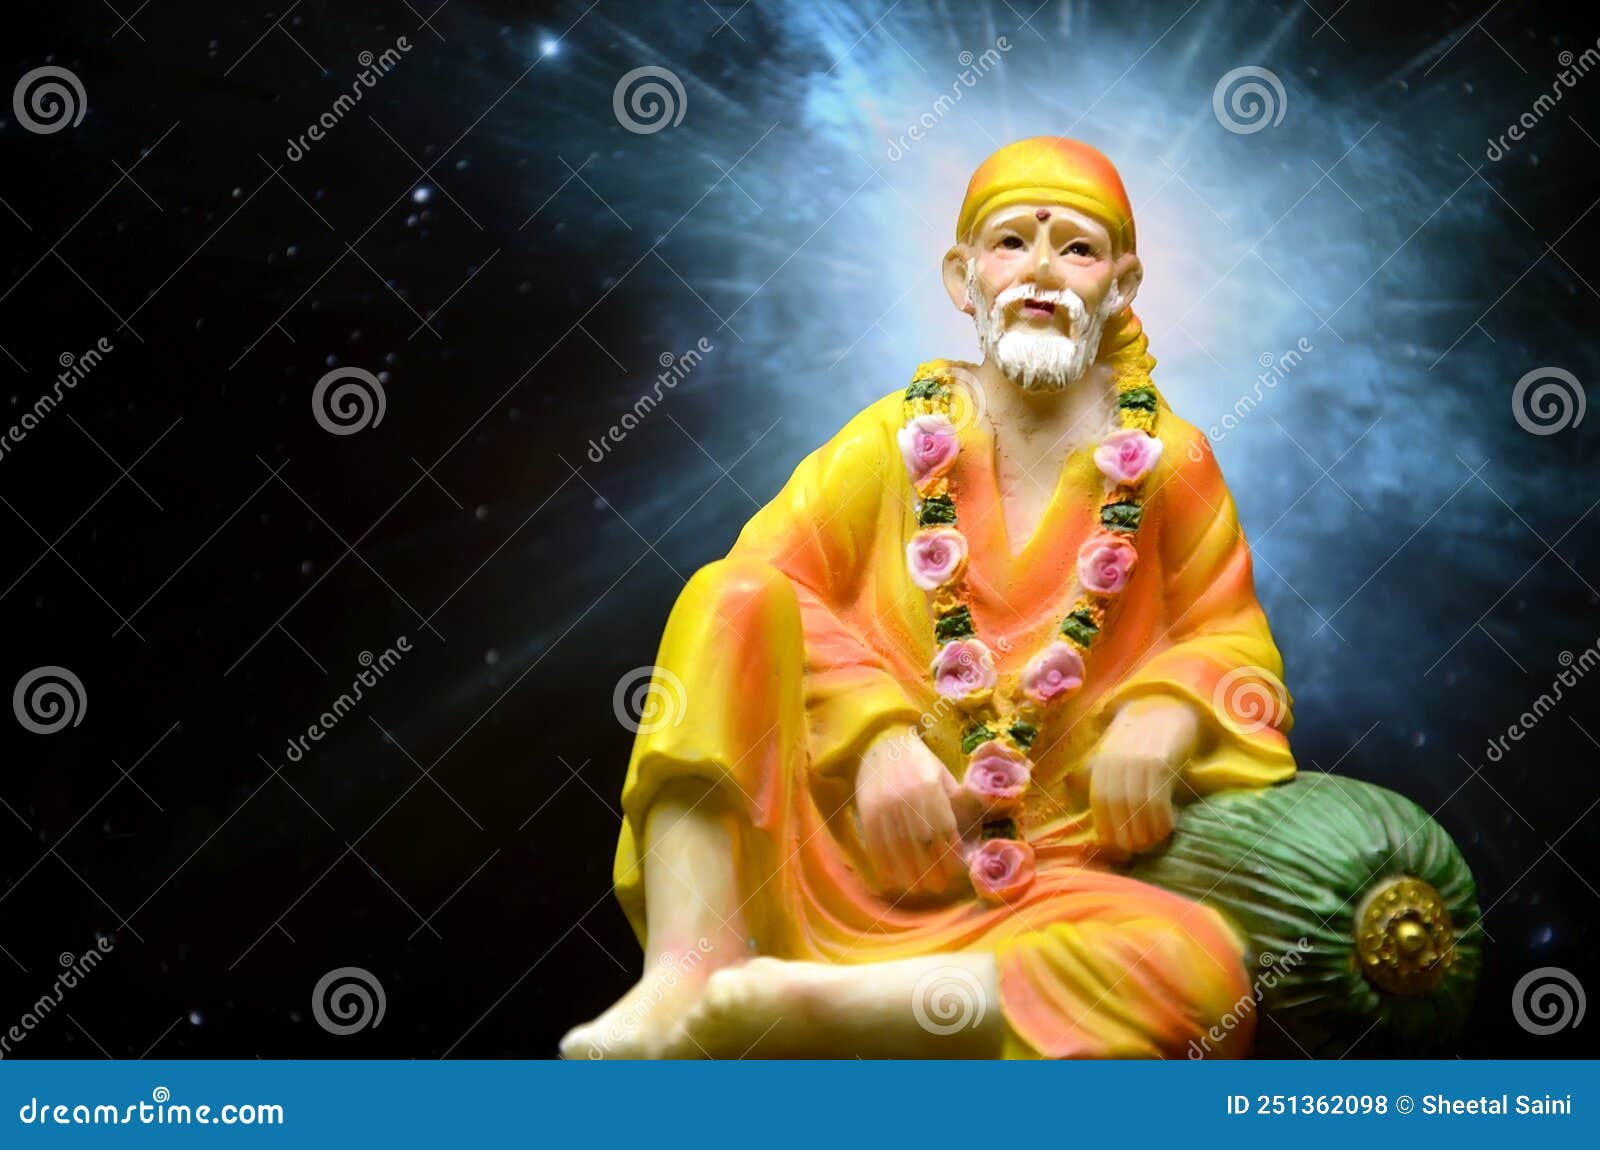 Sai Baba Universe in Background Stock Illustration - Illustration ...